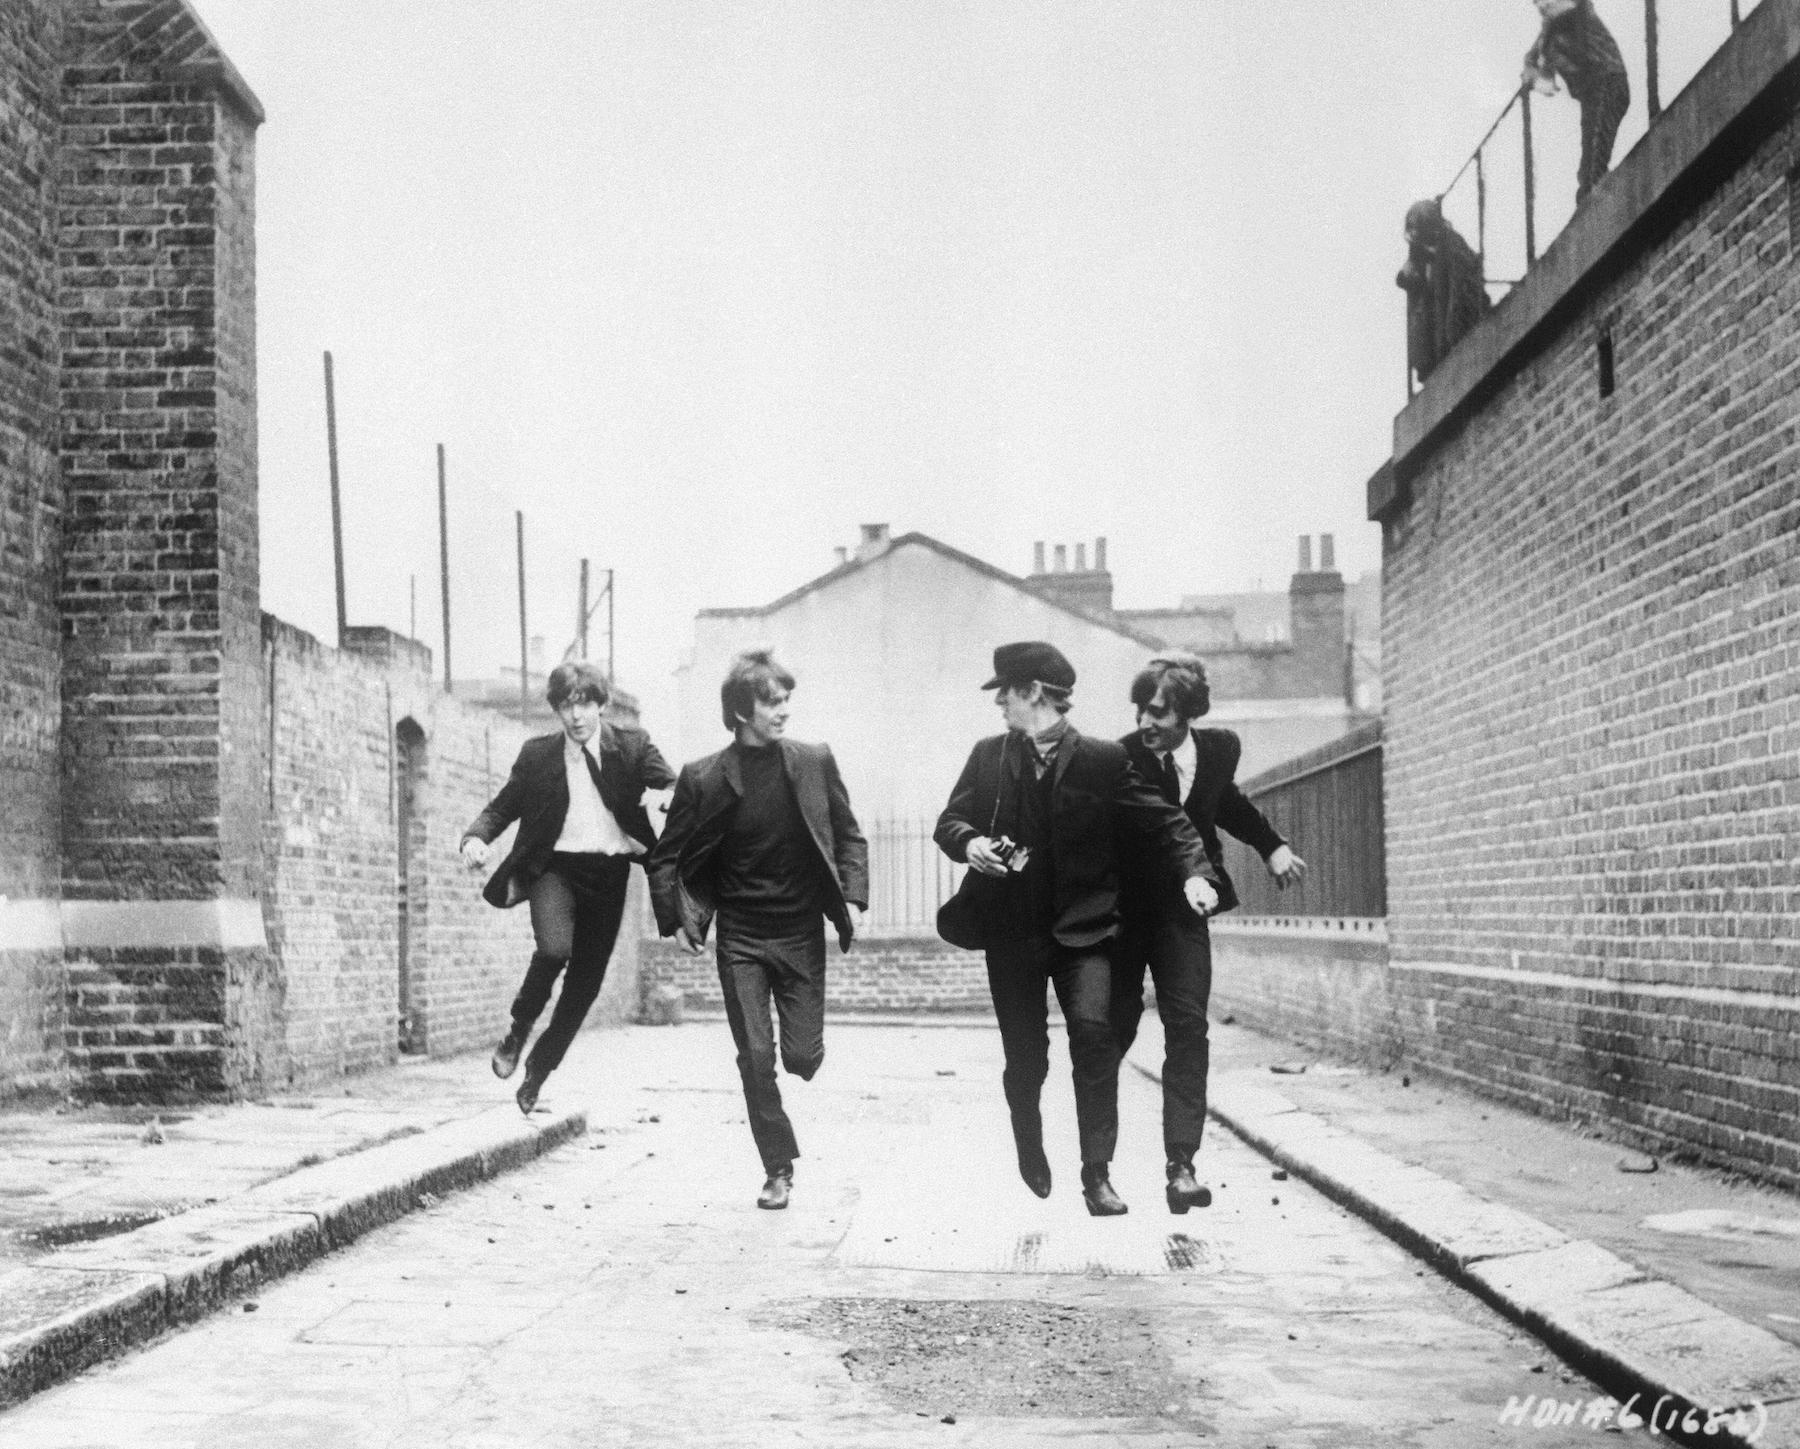 From left to right, Paul McCartney, George Harrison, John Lennon, and Ringo Starr run down an empty London street